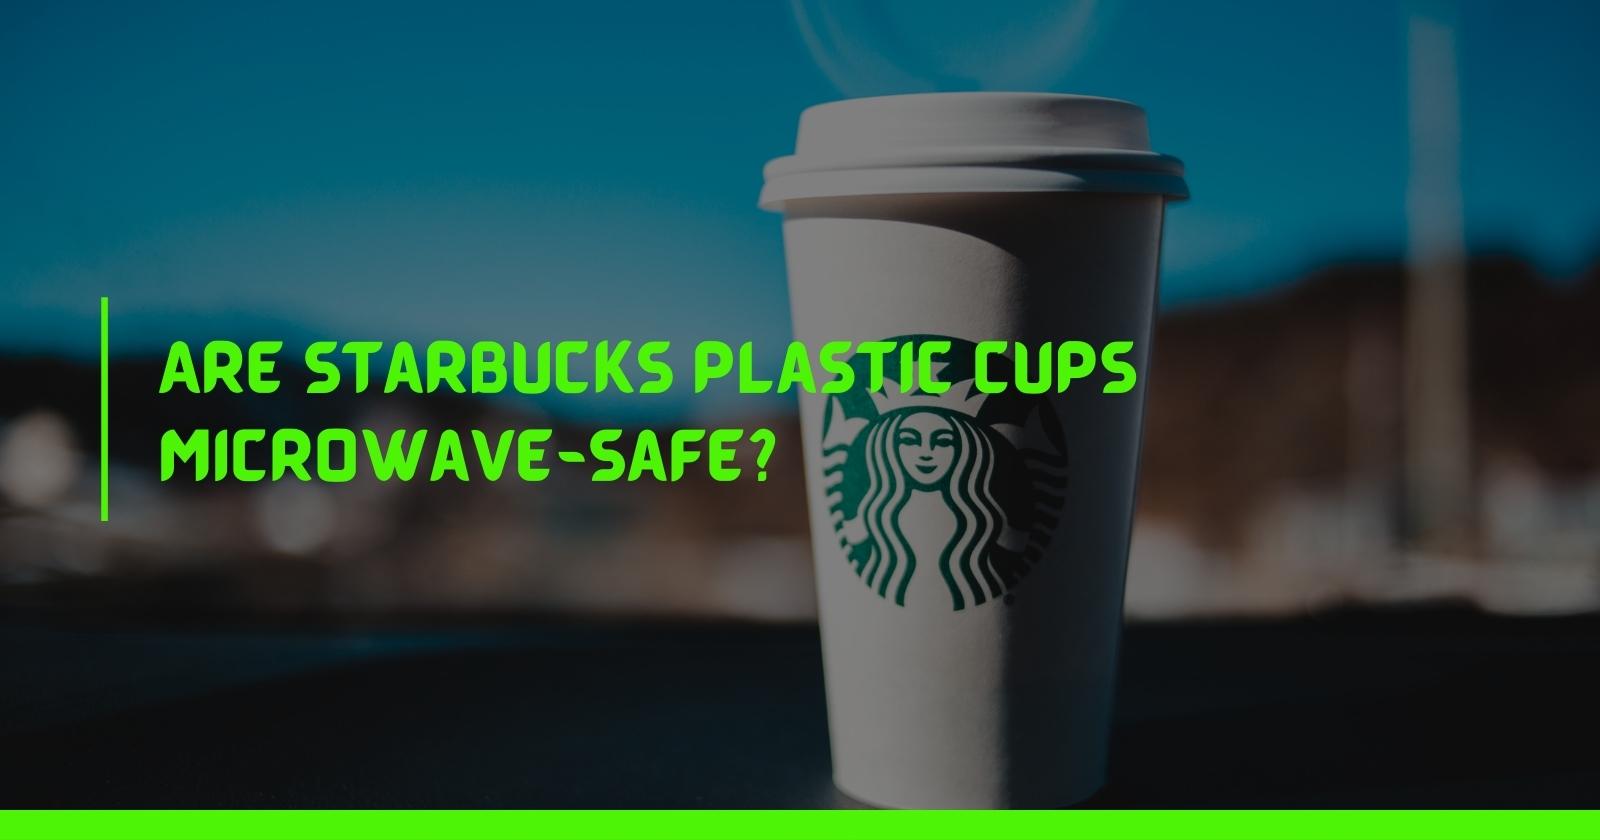 Are Starbucks plastic cups microwave-safe